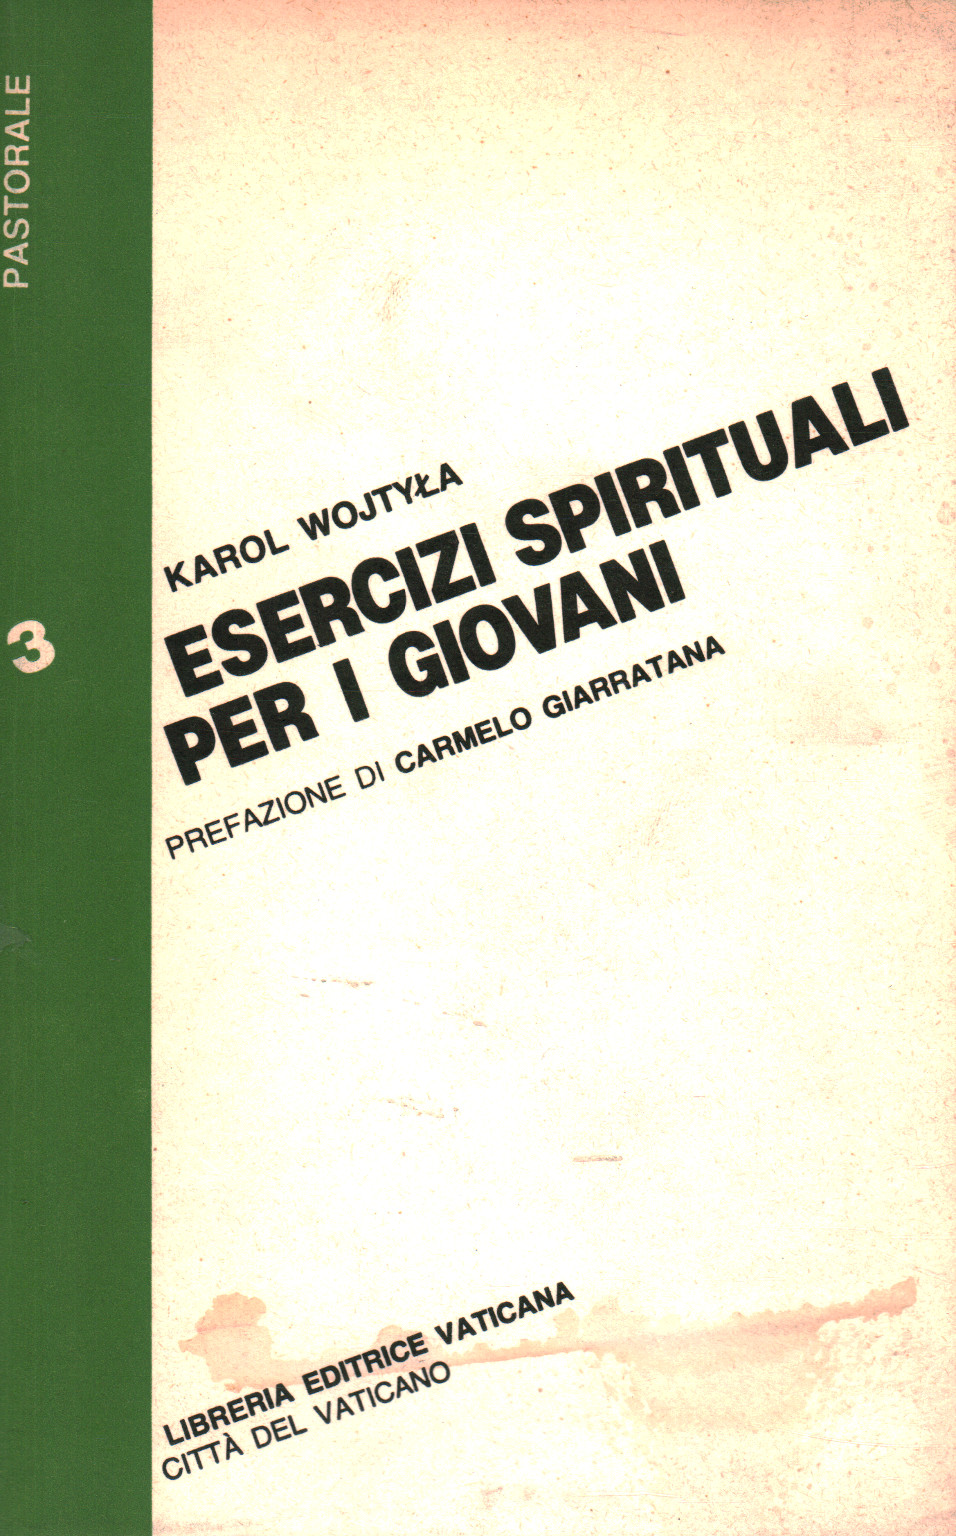 Exercices spirituels pour les jeunes, Karol Wojtyla